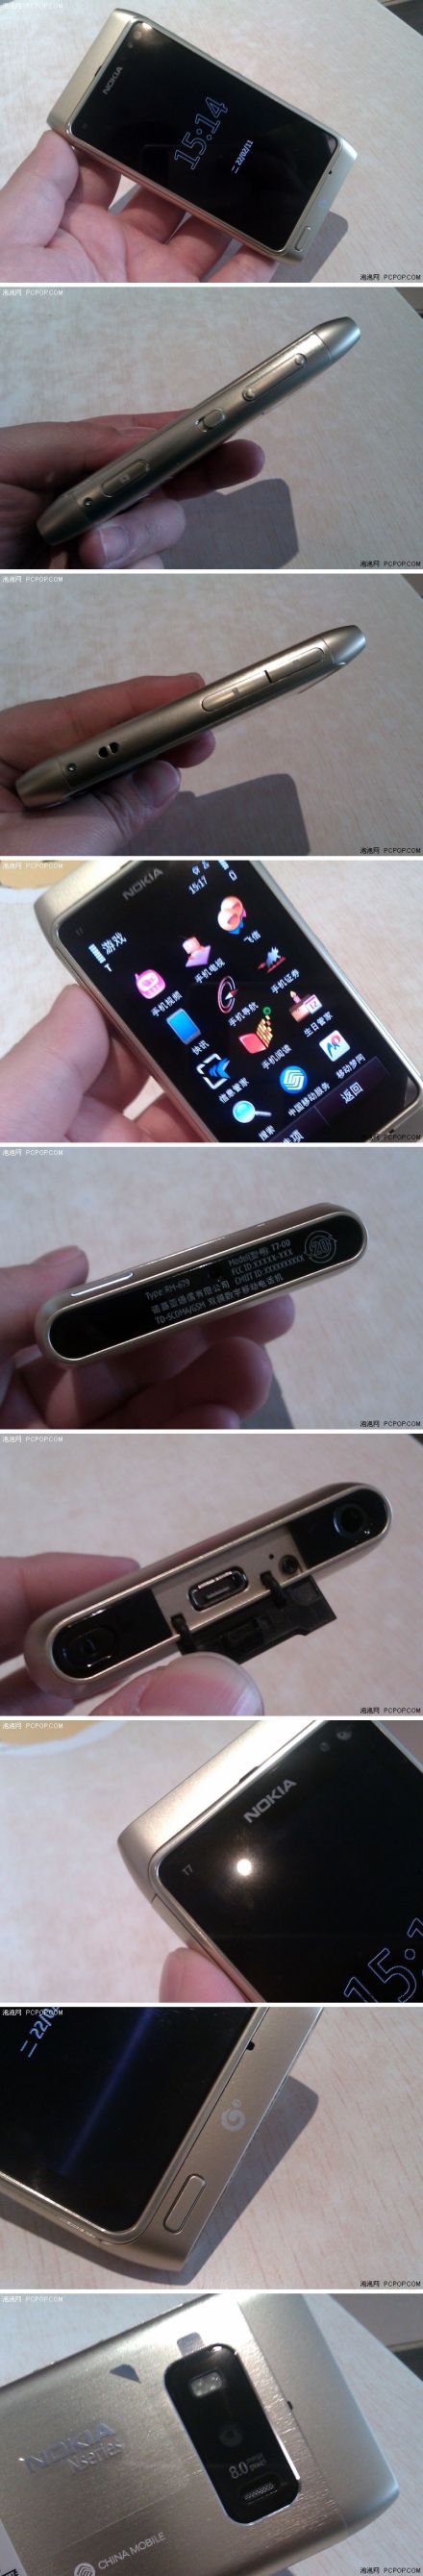 Nokia T7-00: lebukott a symbianos, 8 megapixeles modell